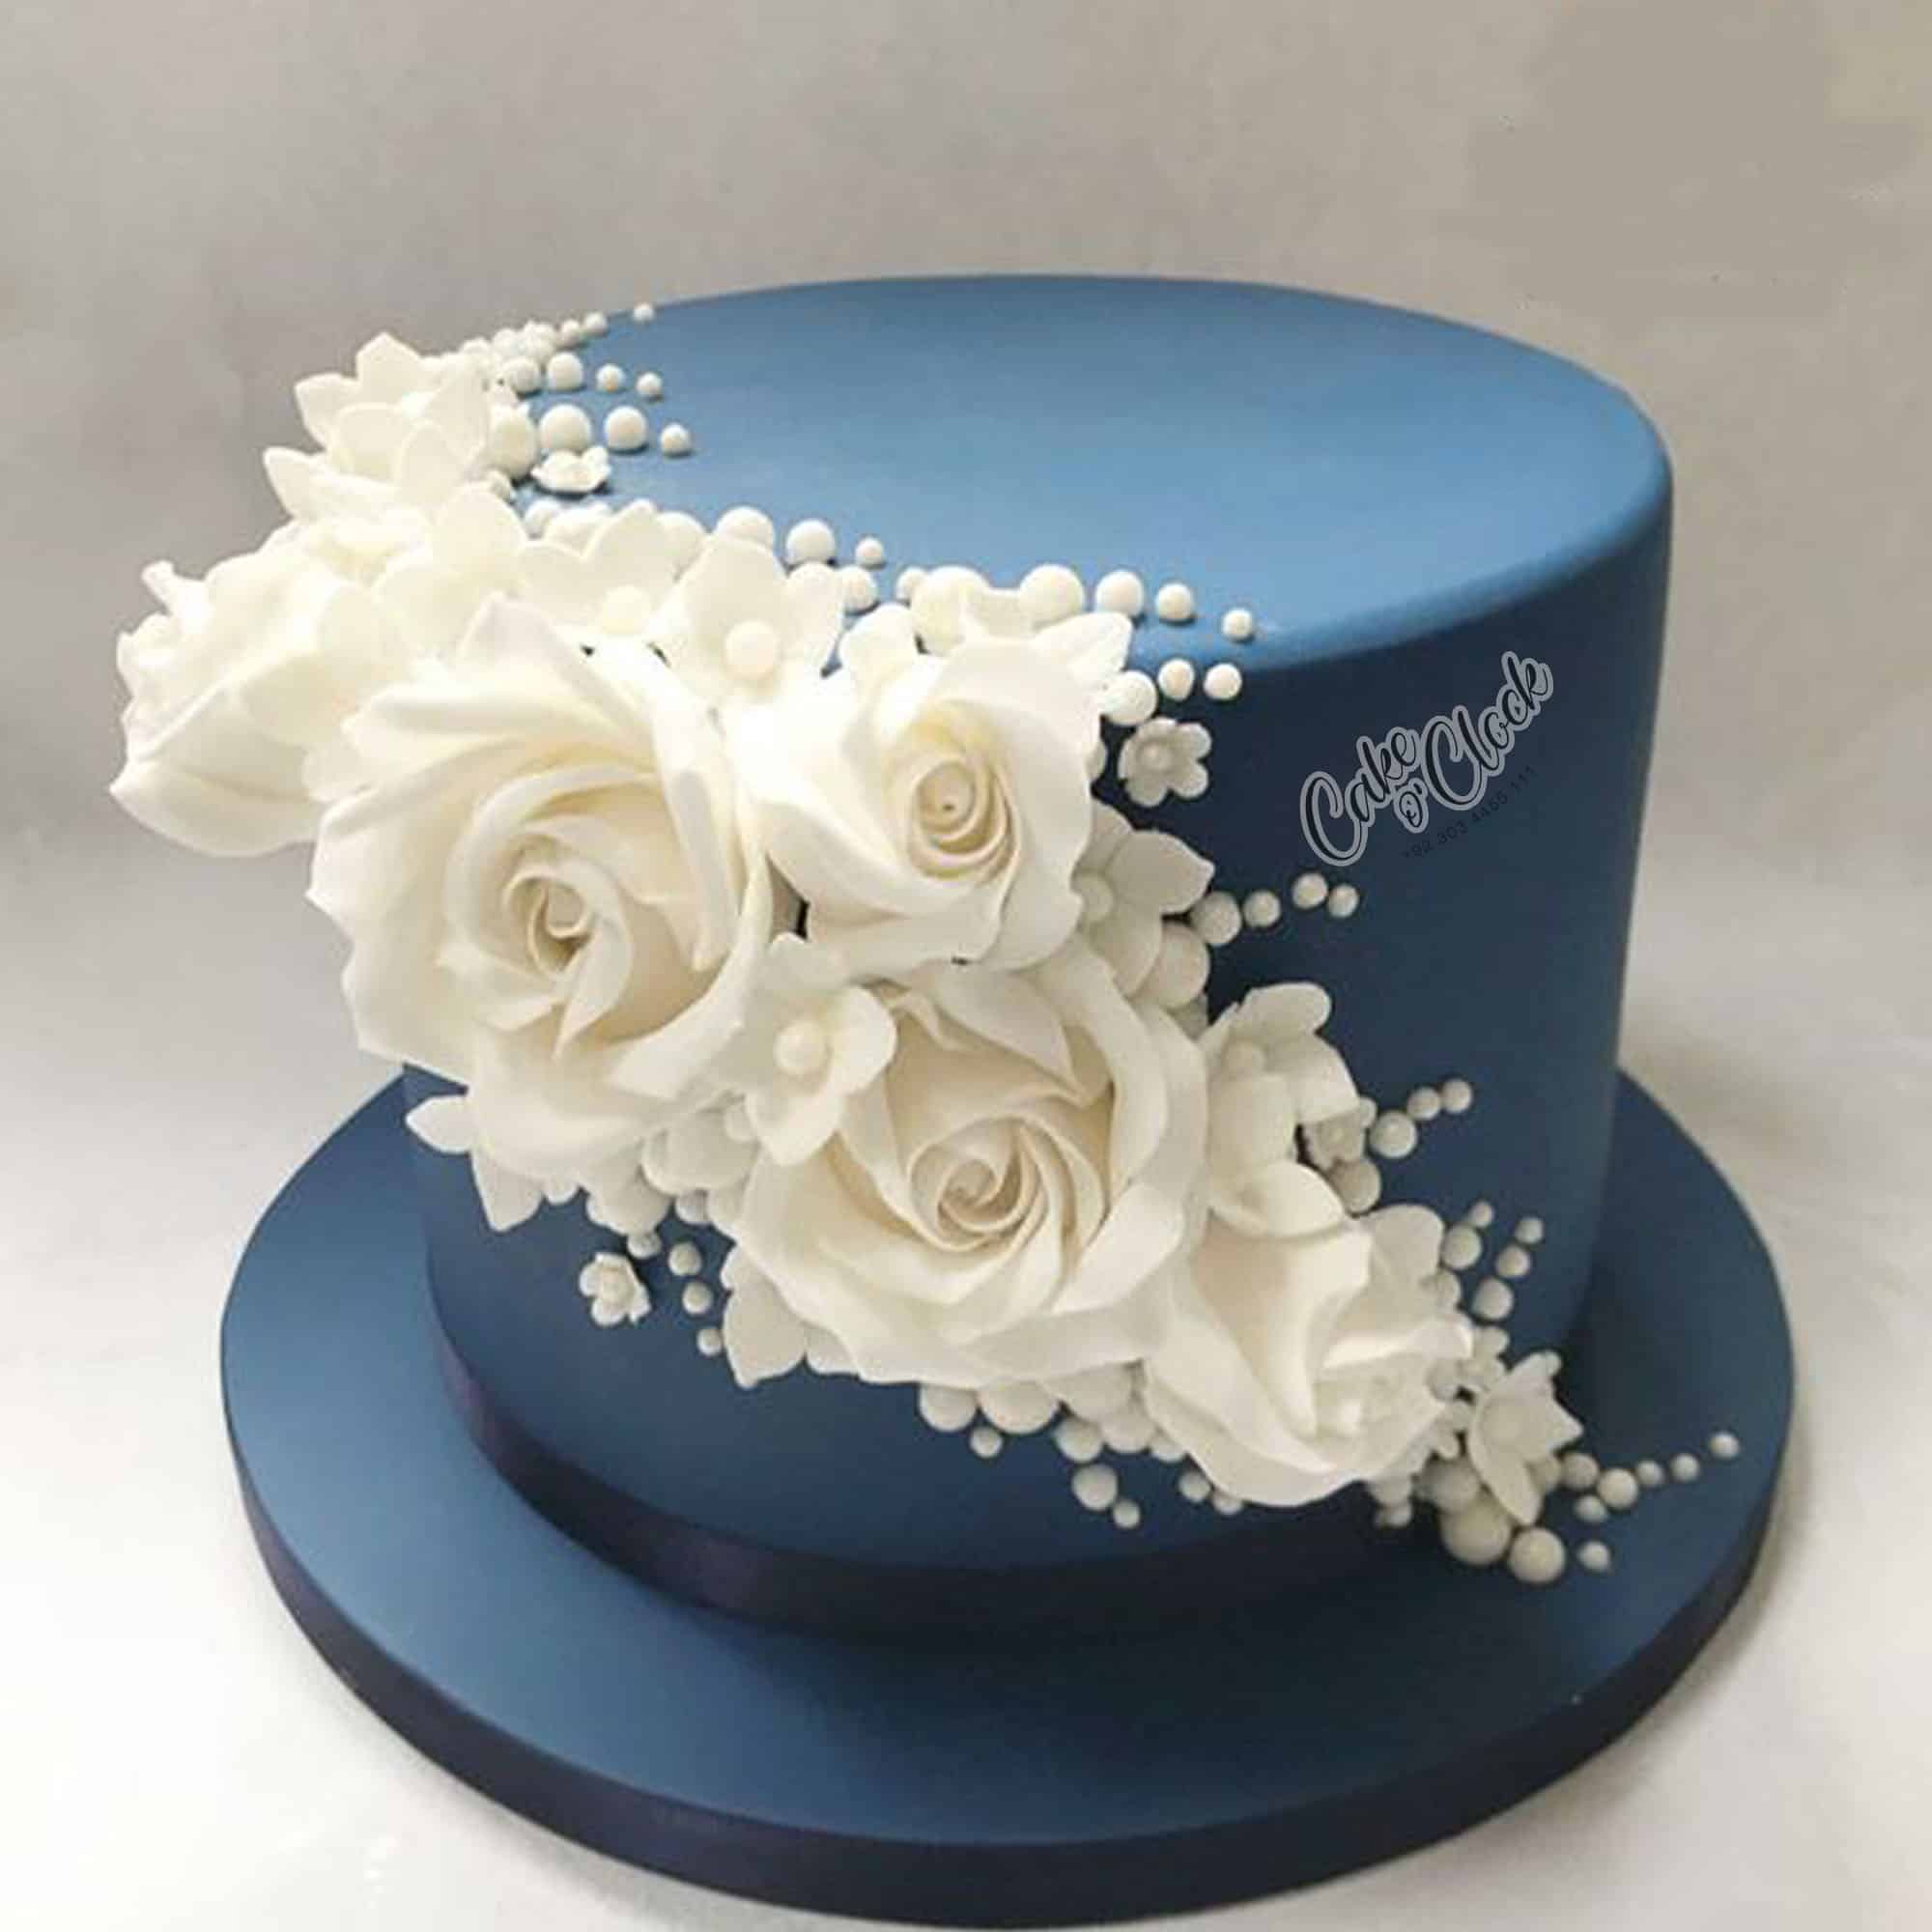 WEDDING ANNIVERSARY CAKE | THE CRVAERY CAKES